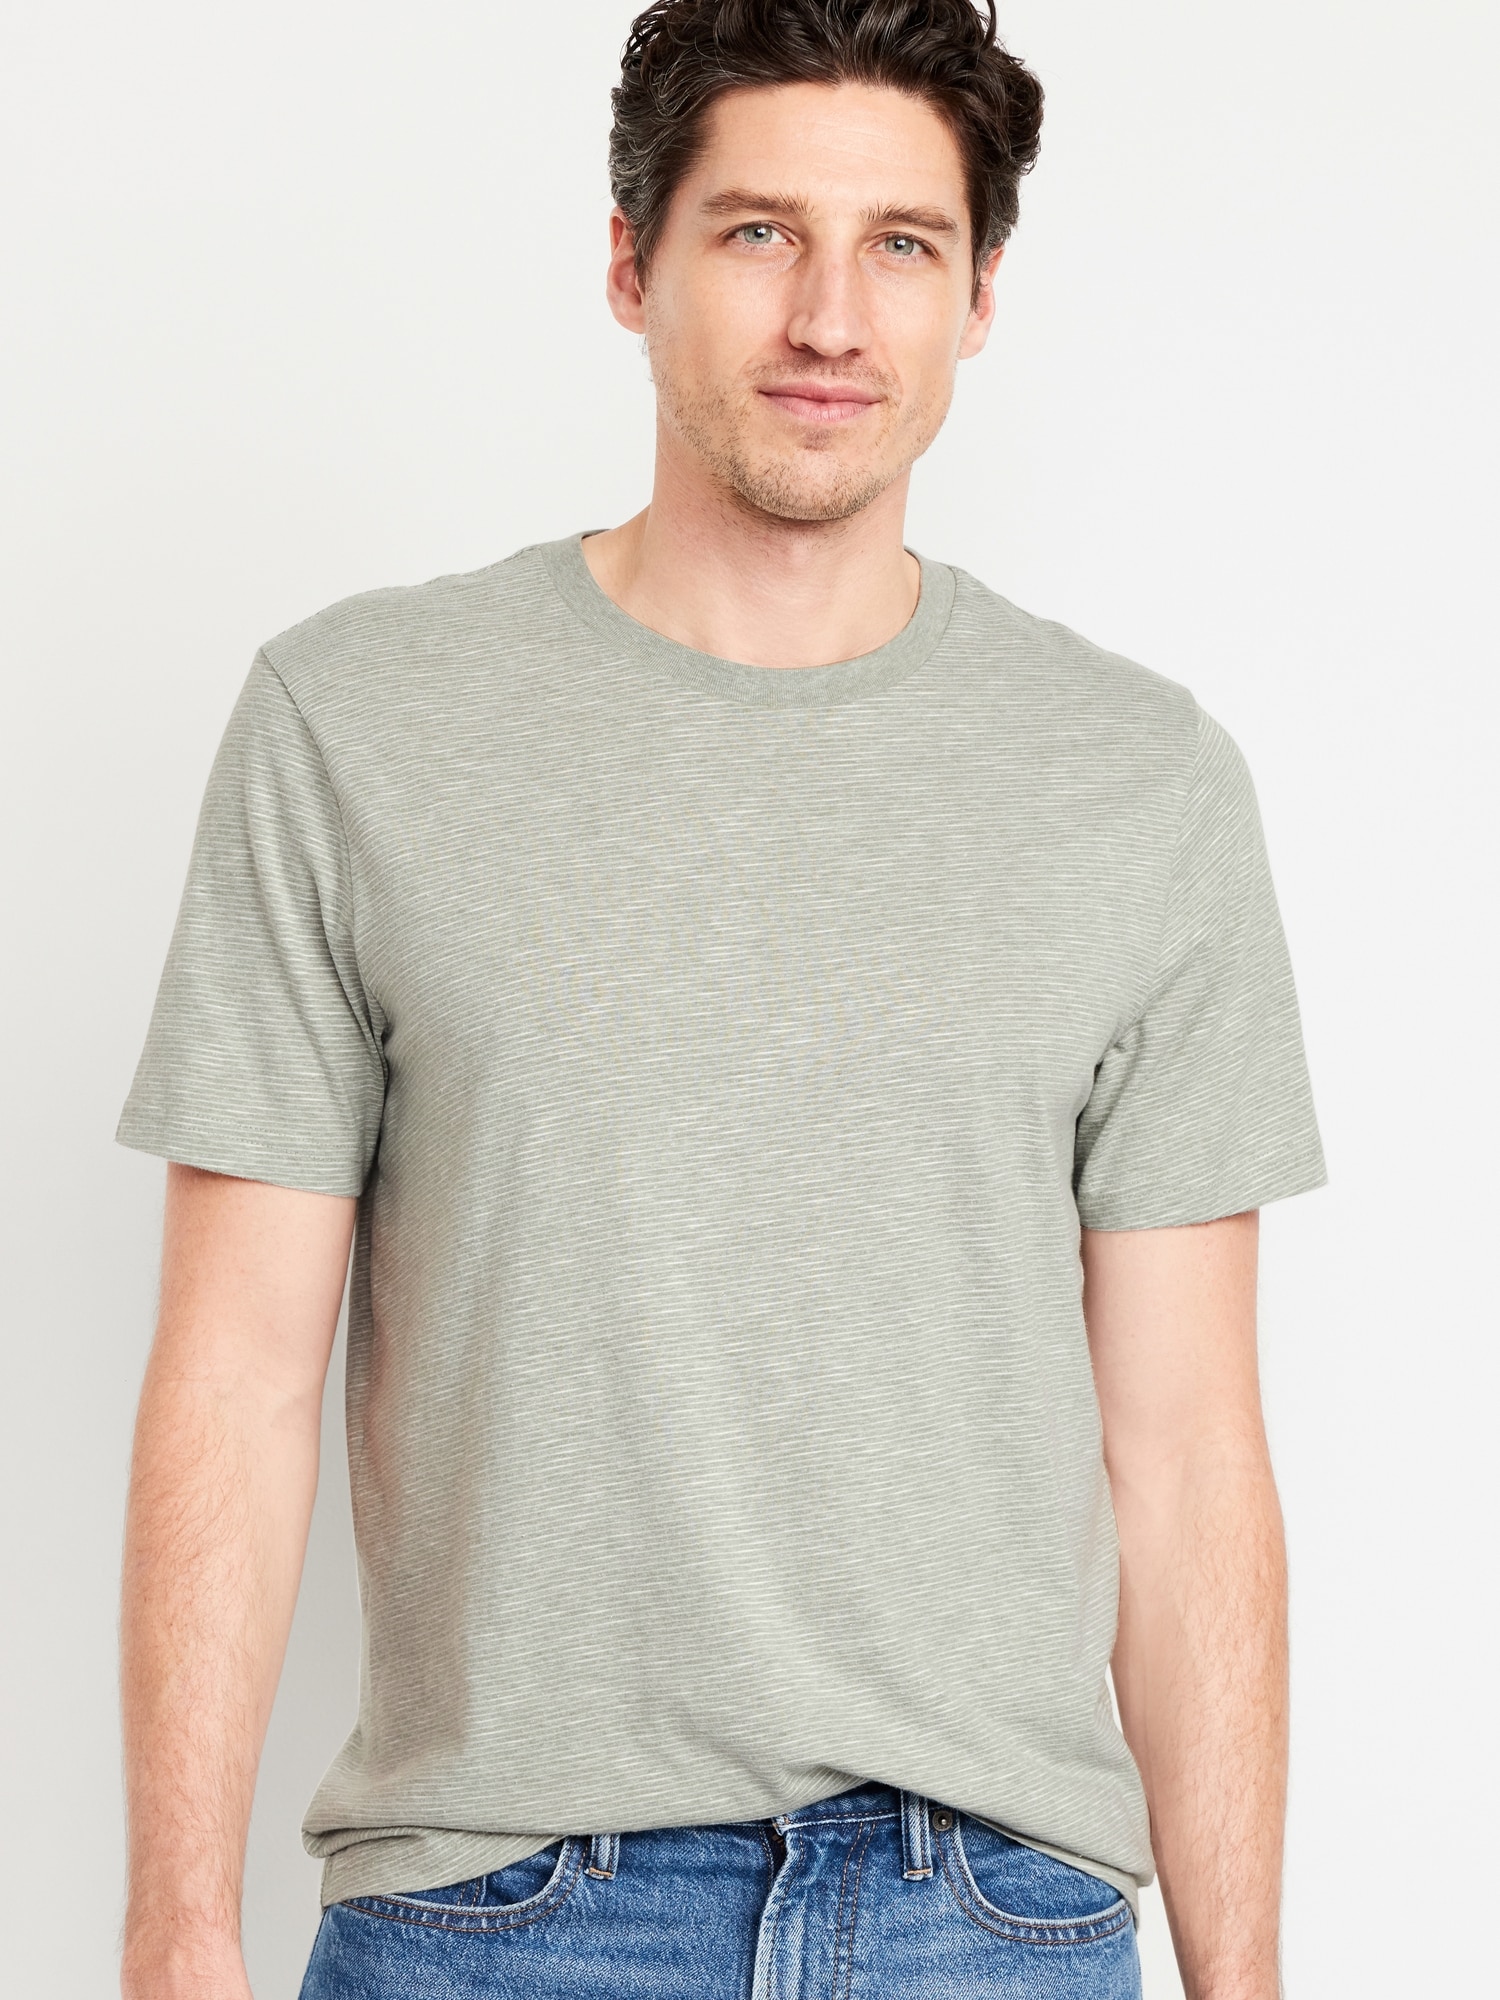 Soft-Washed Crew-Neck T-Shirt